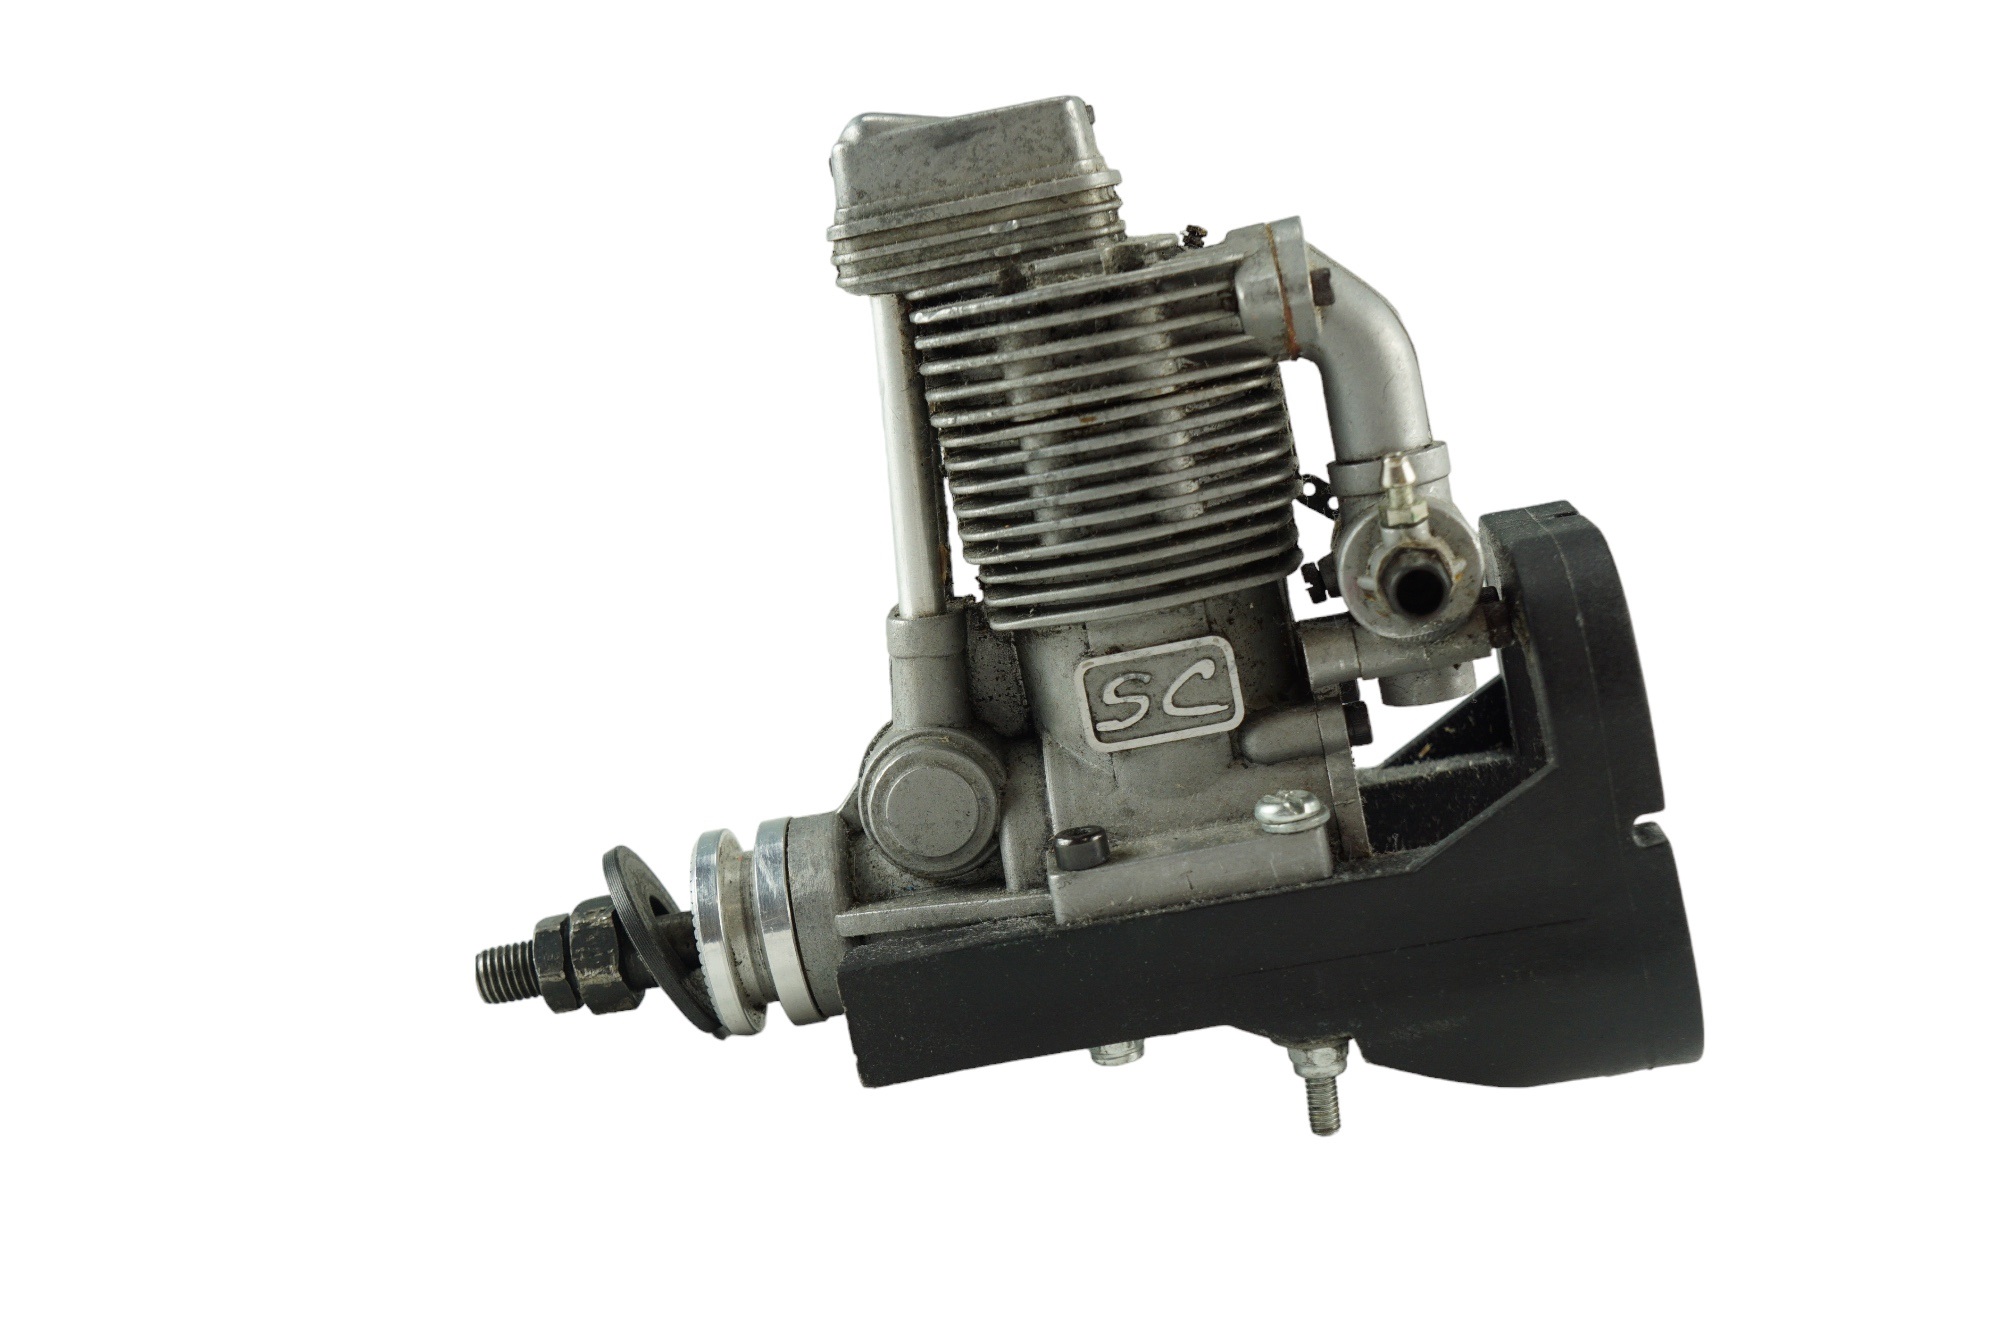 A Super Custom (SC) 91 four-stroke nitro engine, 15 x 13 x 6.5 cm - Image 5 of 6